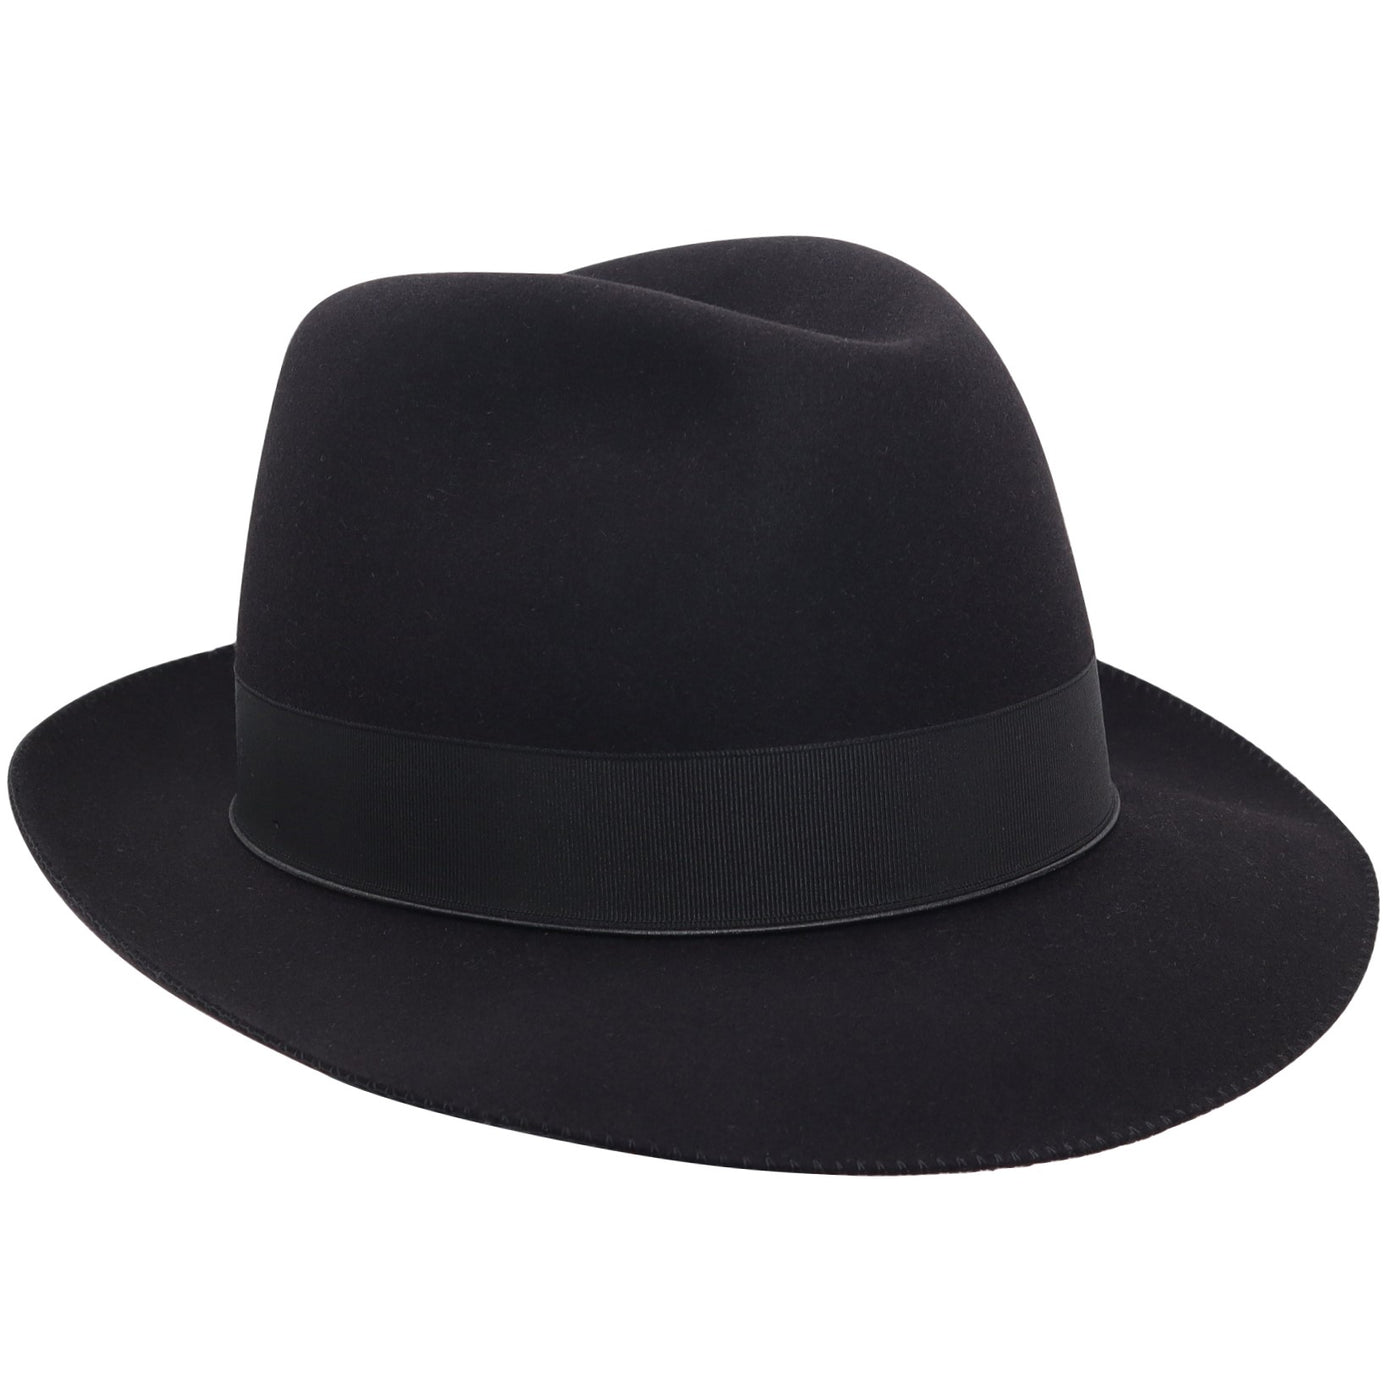 Astuccio 214, product_type] - Borsalino for Atica fedora hat